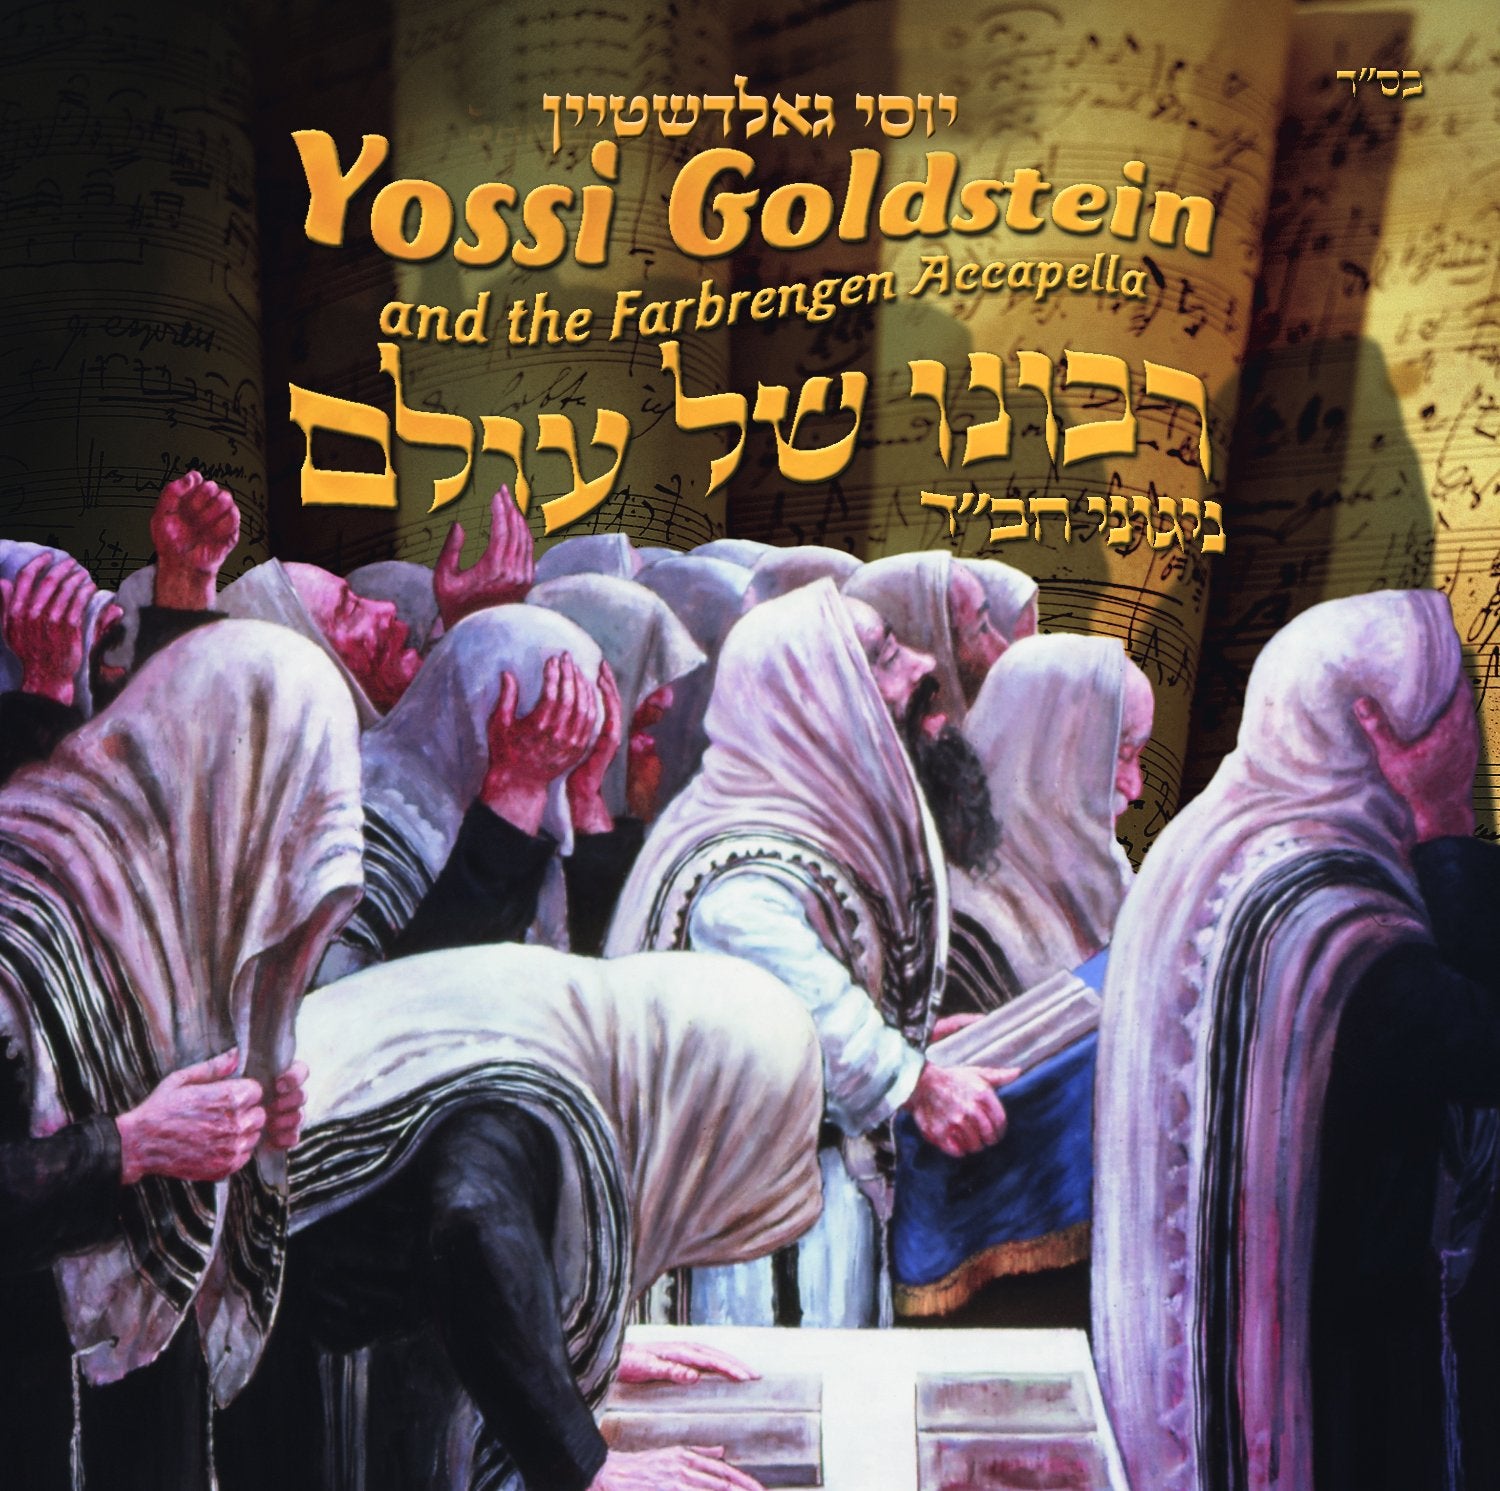 Yossi Goldstein - Farbrengen Accapella